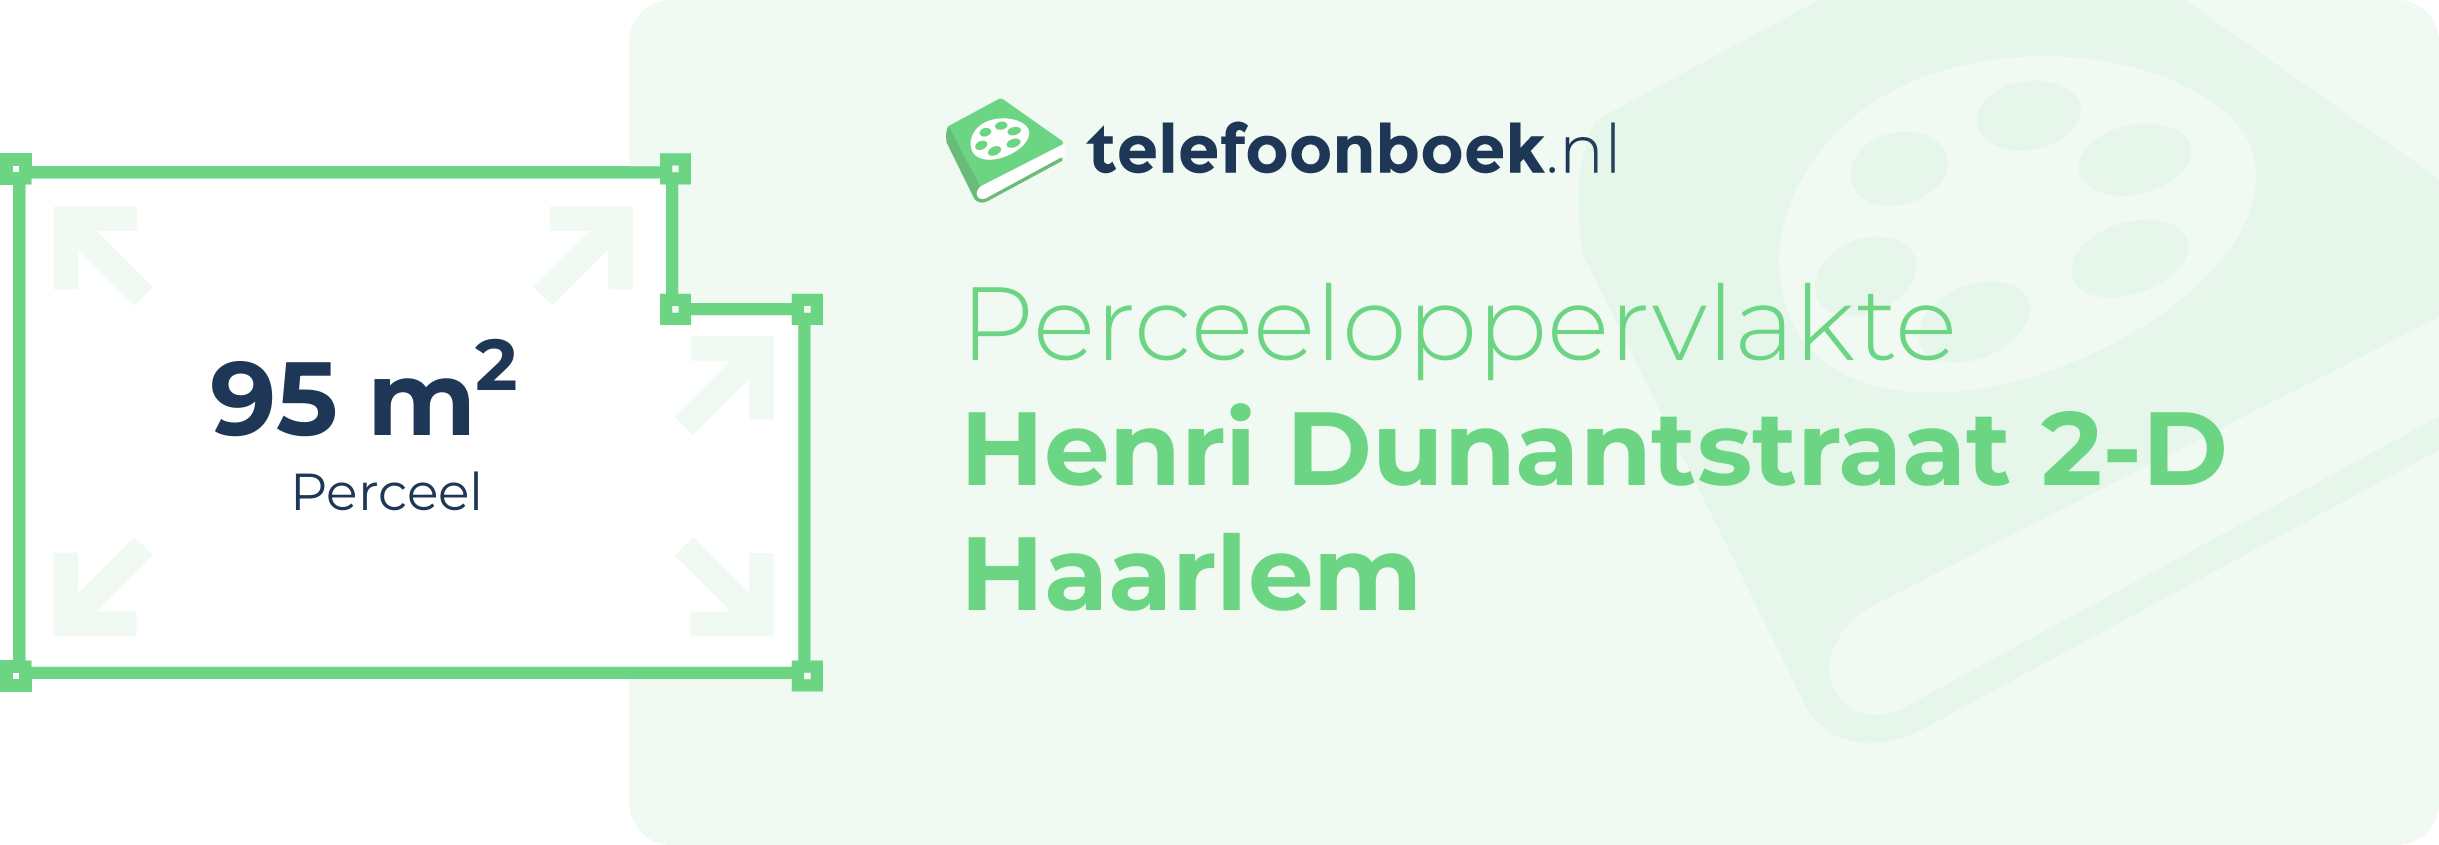 Perceeloppervlakte Henri Dunantstraat 2-D Haarlem